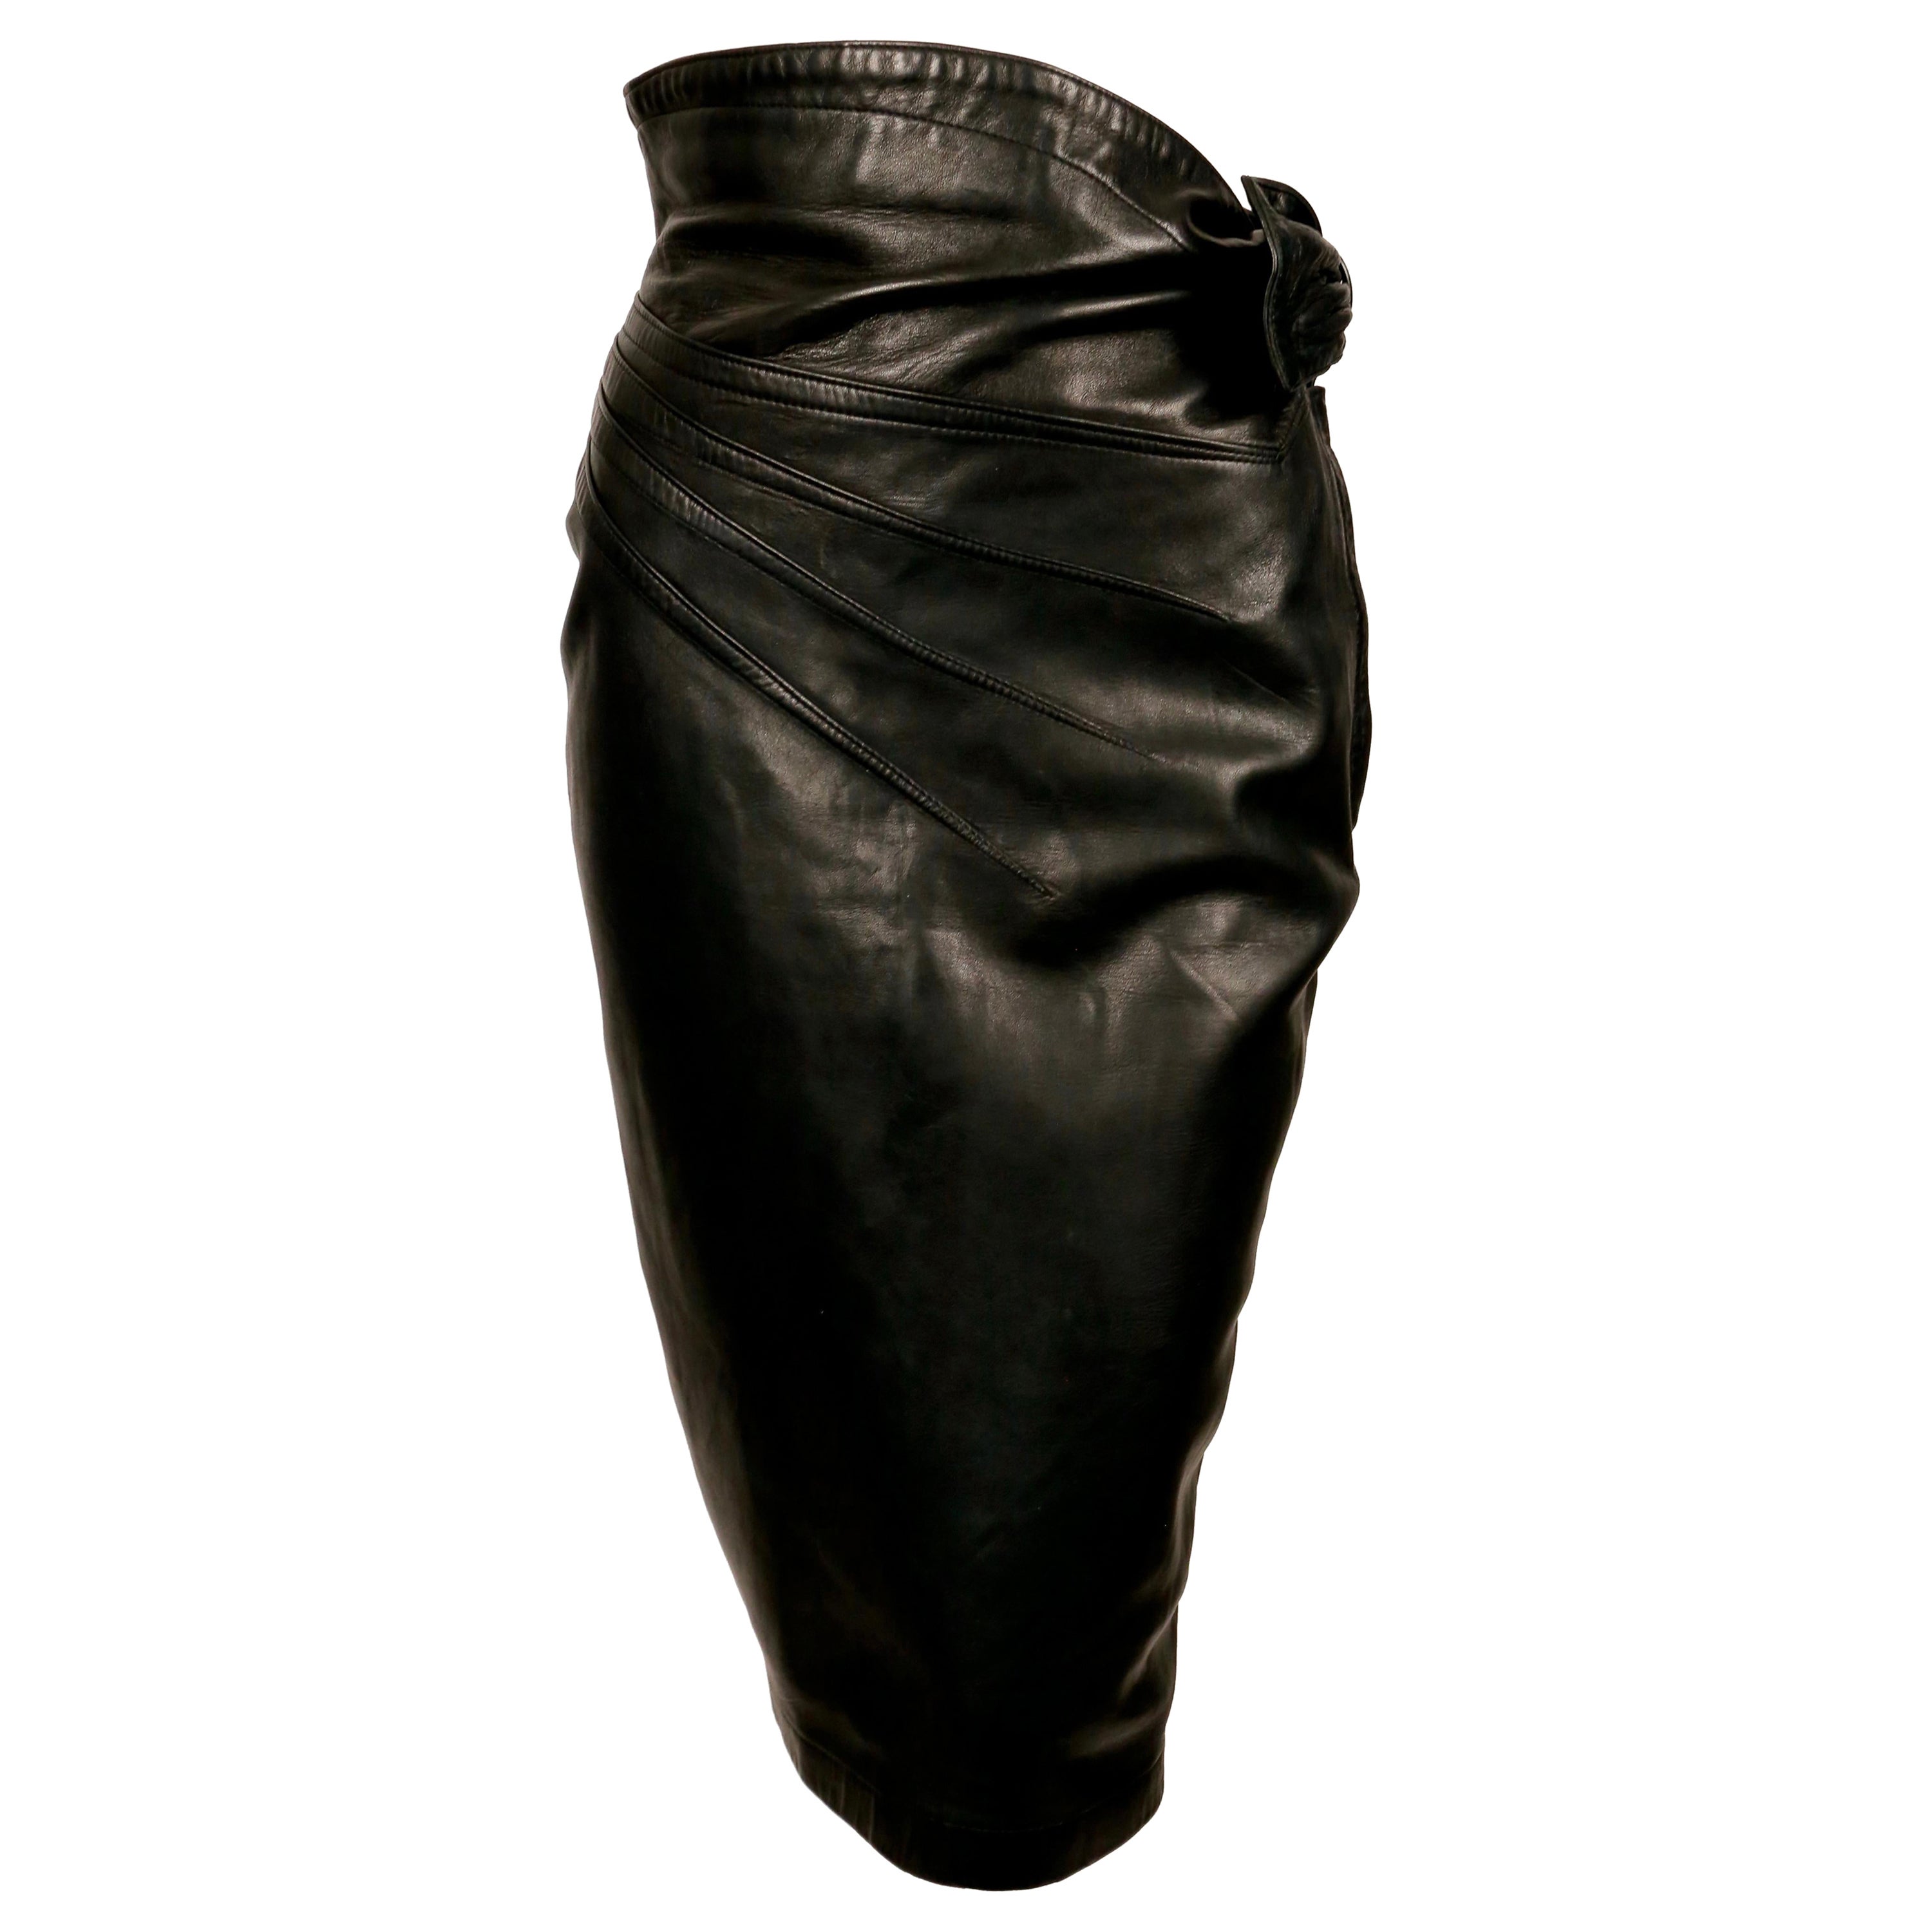 1984 AZZEDINE ALAIA black leather skirt with side buckle